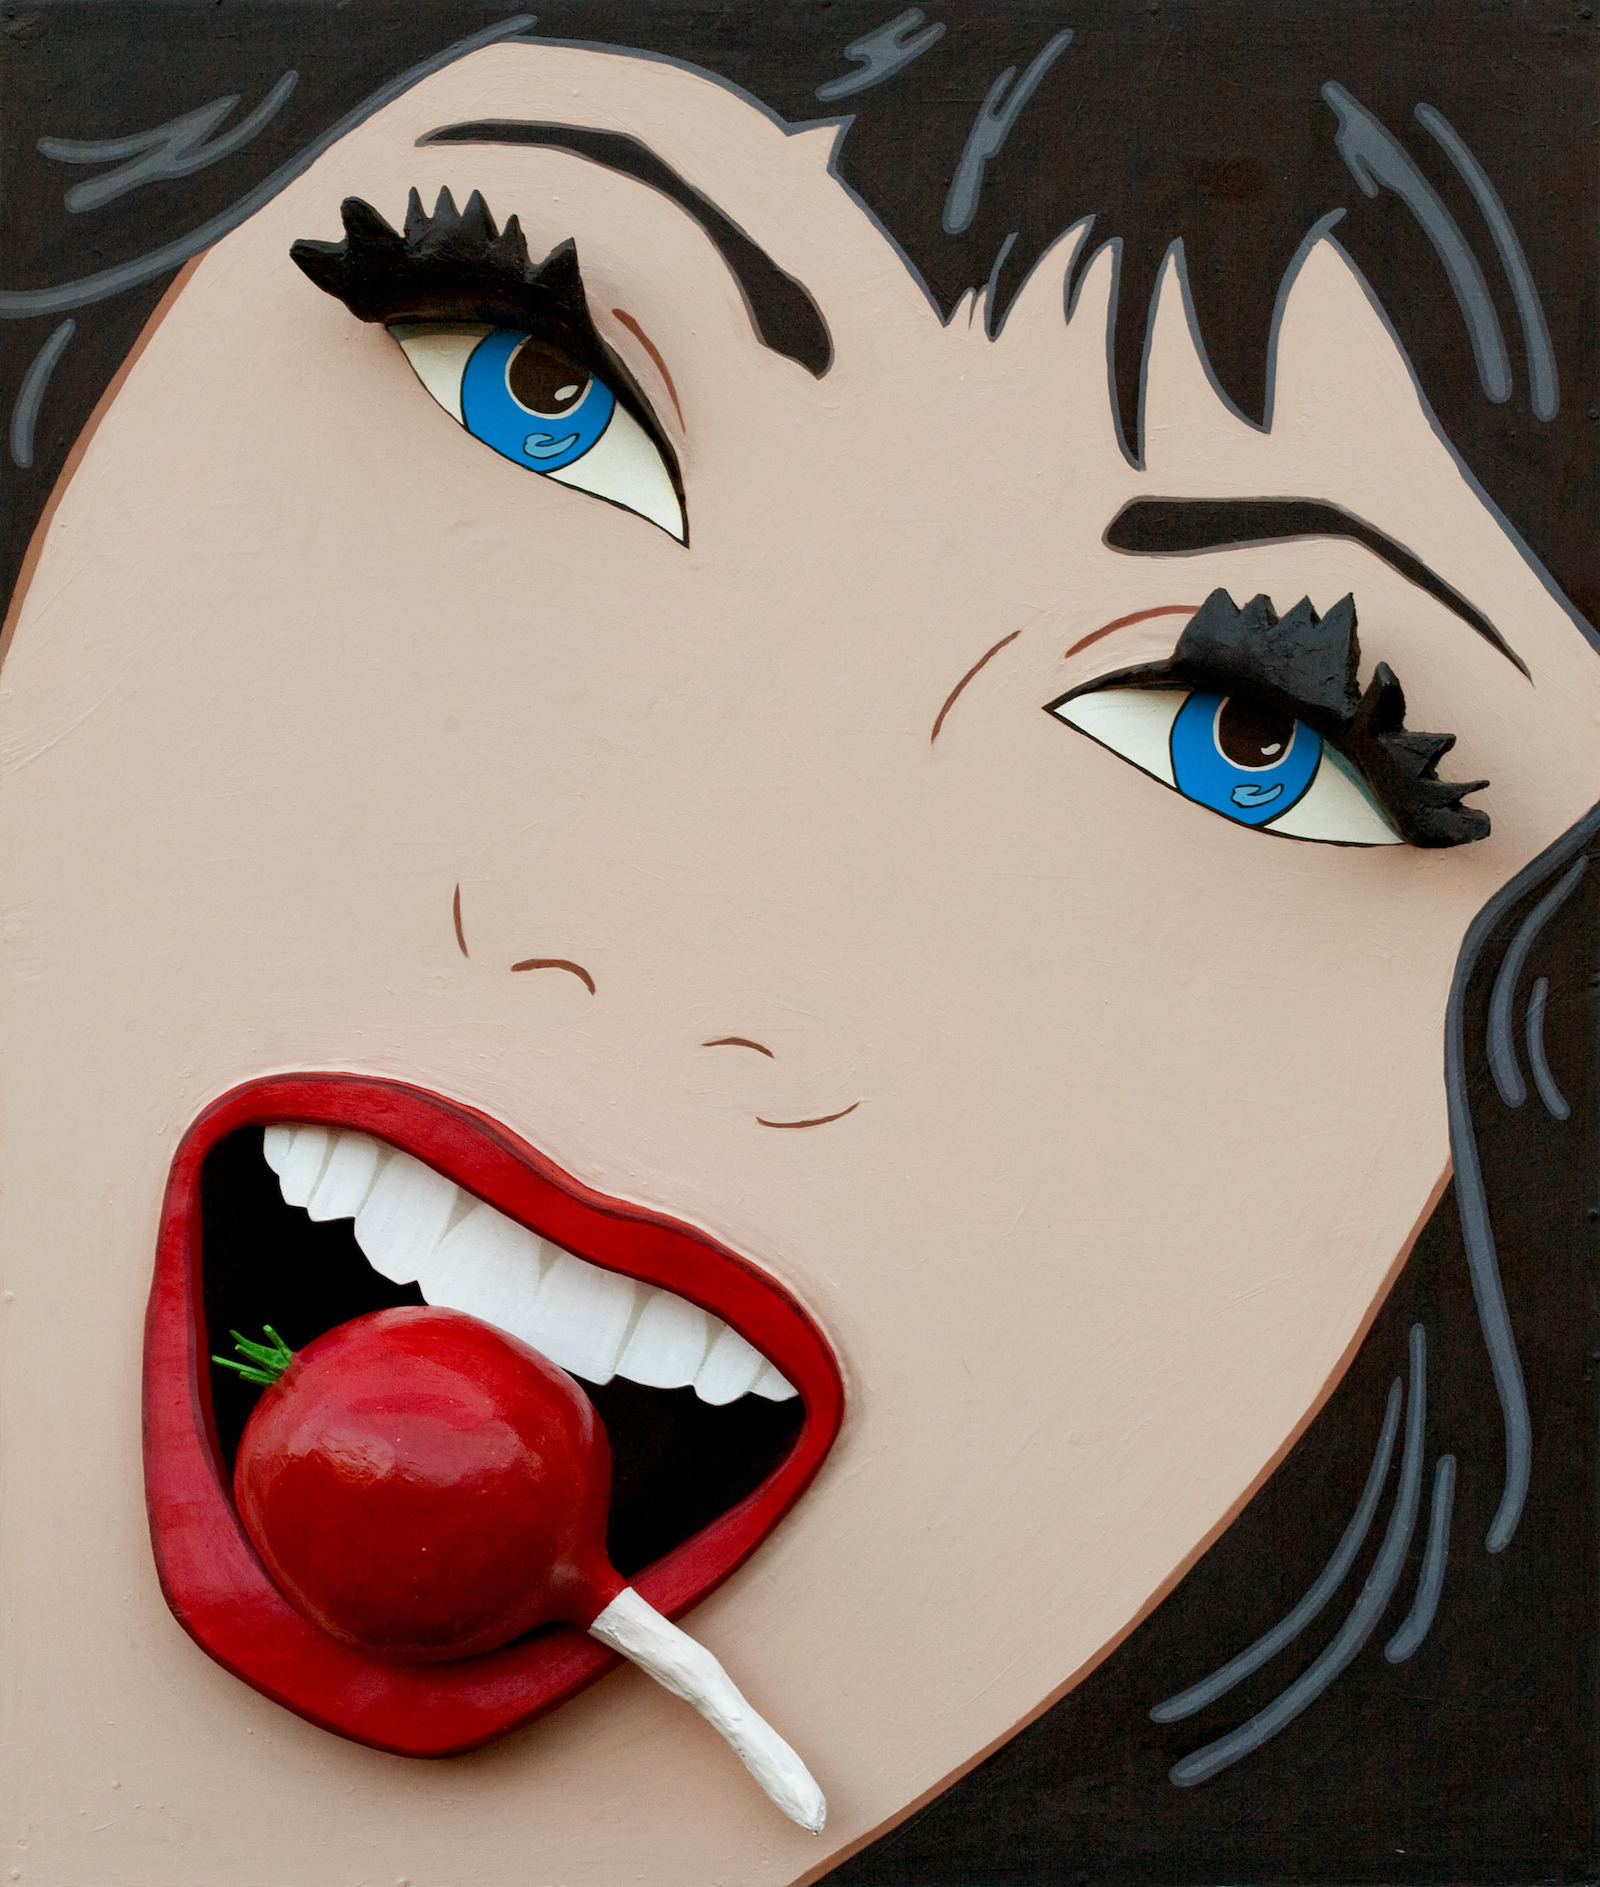 A woman's painted, cartoon face biting a three-dimensional radish